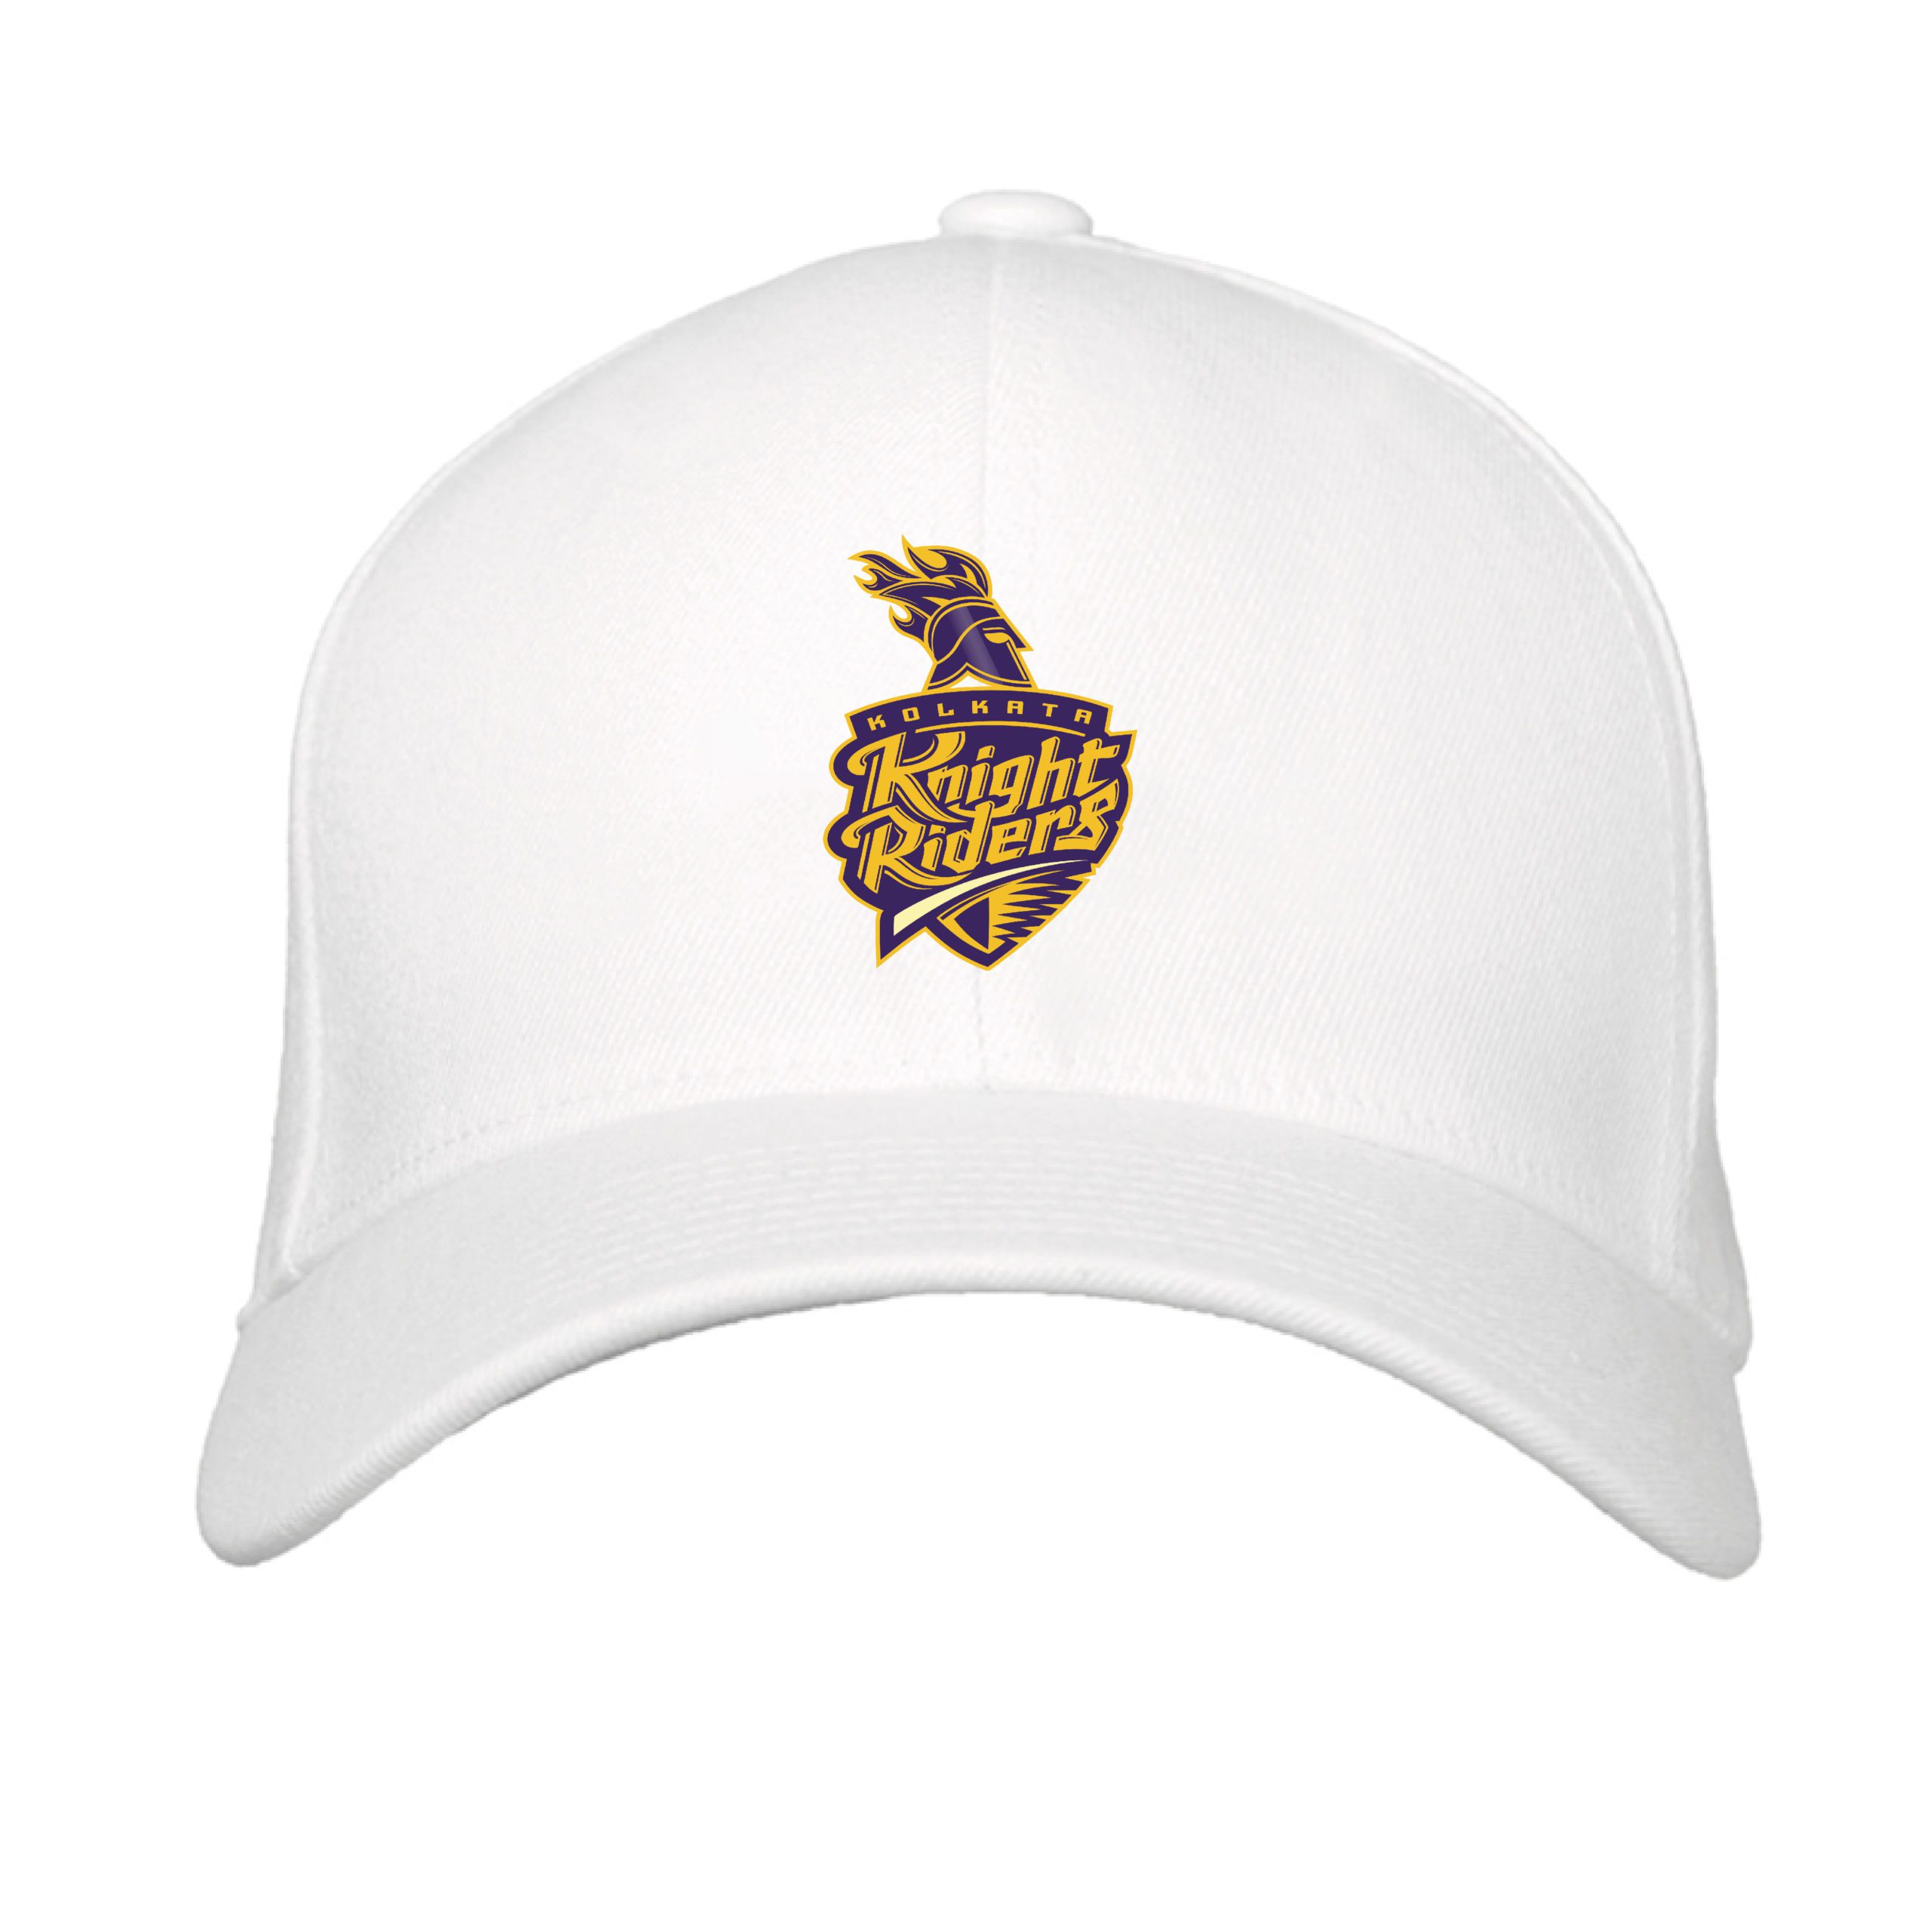 IPL KKR Logo Printed Caps for Cricket Fans (Kolkata Knight Riders)